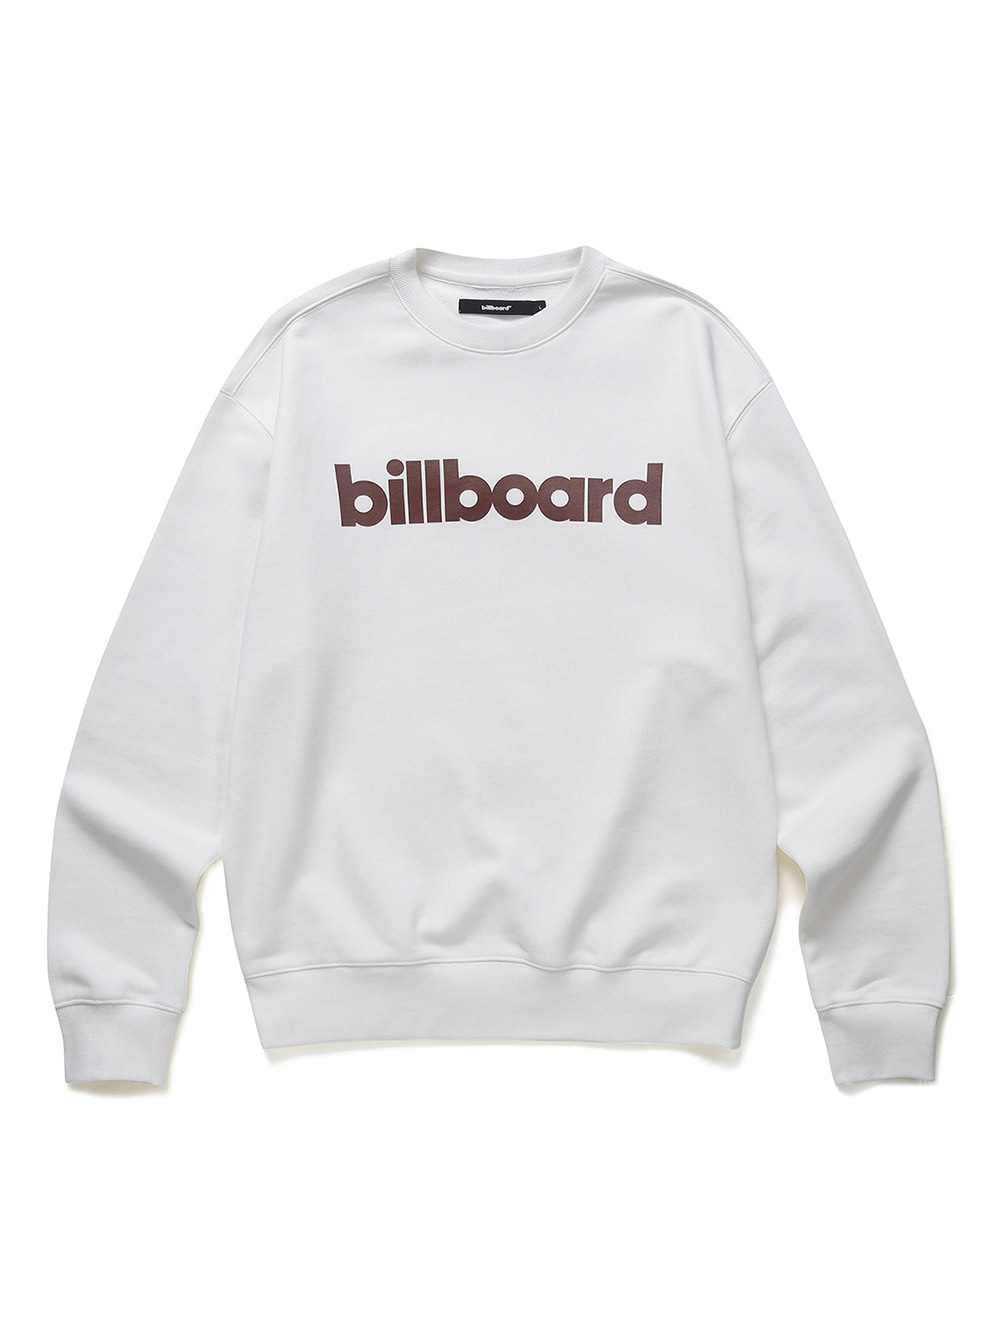 Billboard Global Label Sweatshirt_White